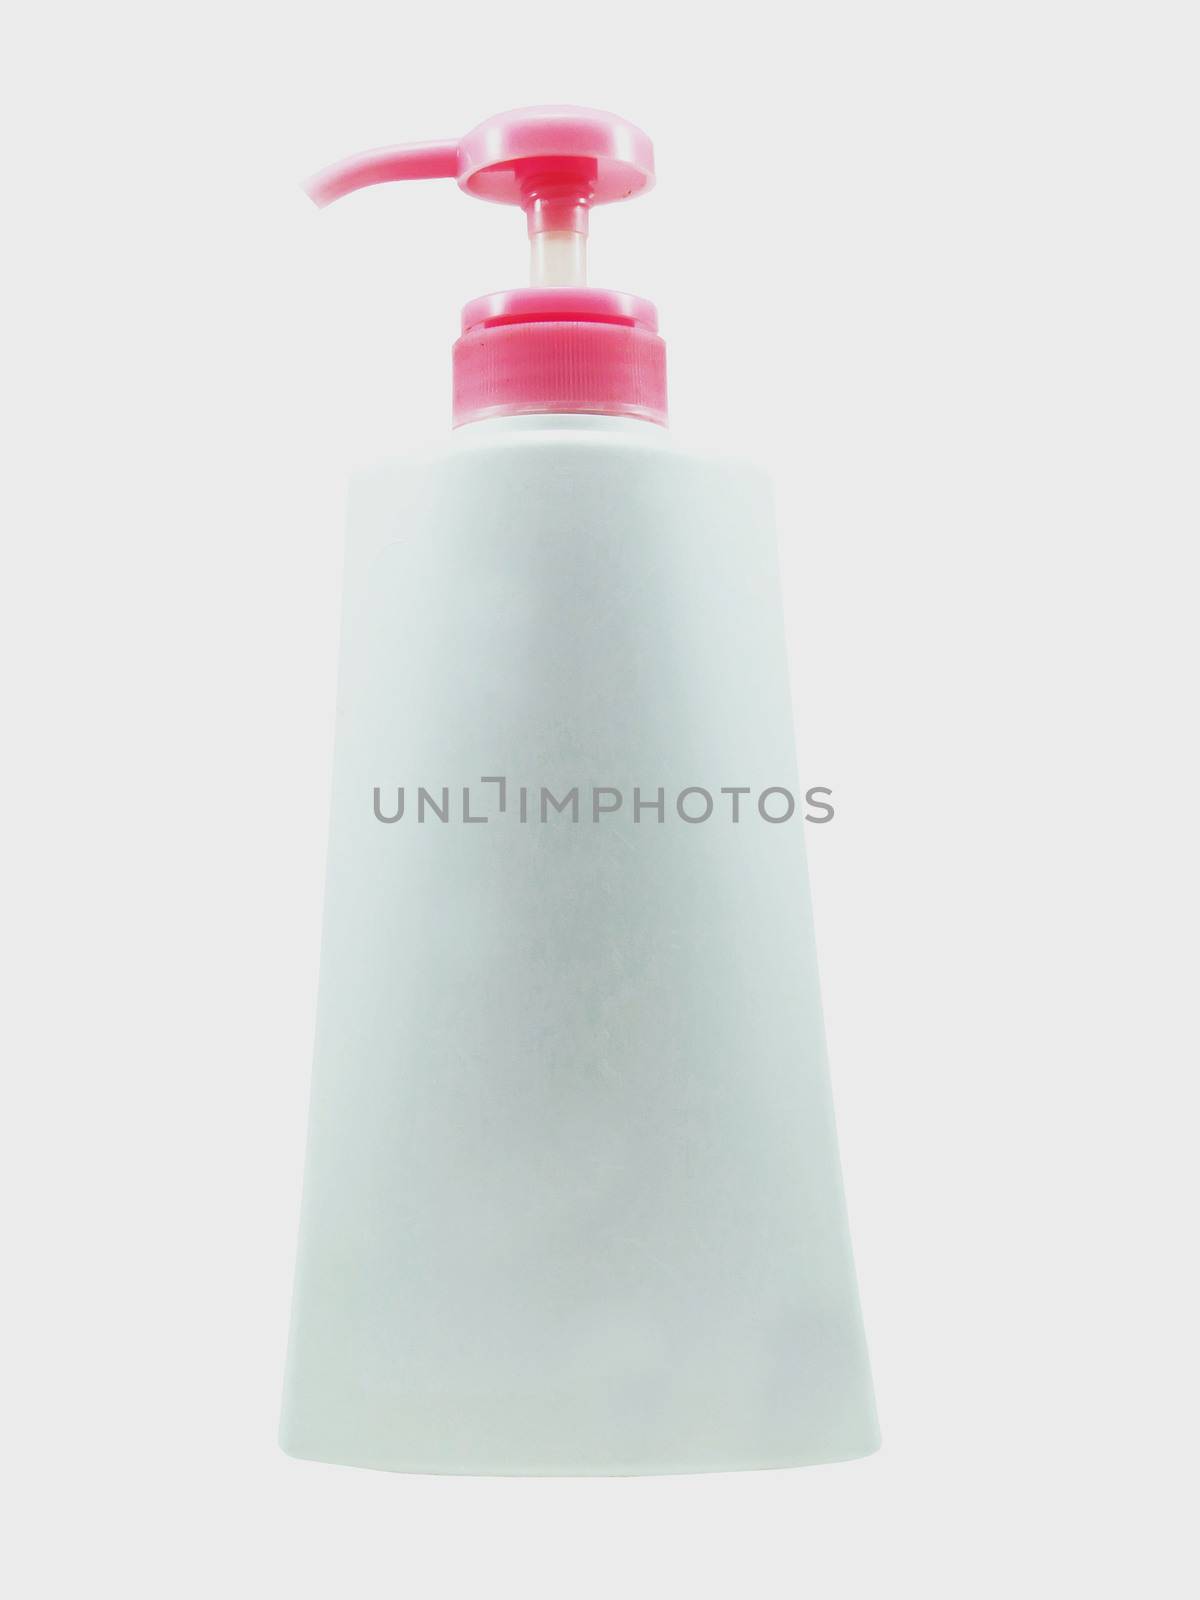 Plastic Clean White Bottle With pink Dispenser Pump by sutipp11